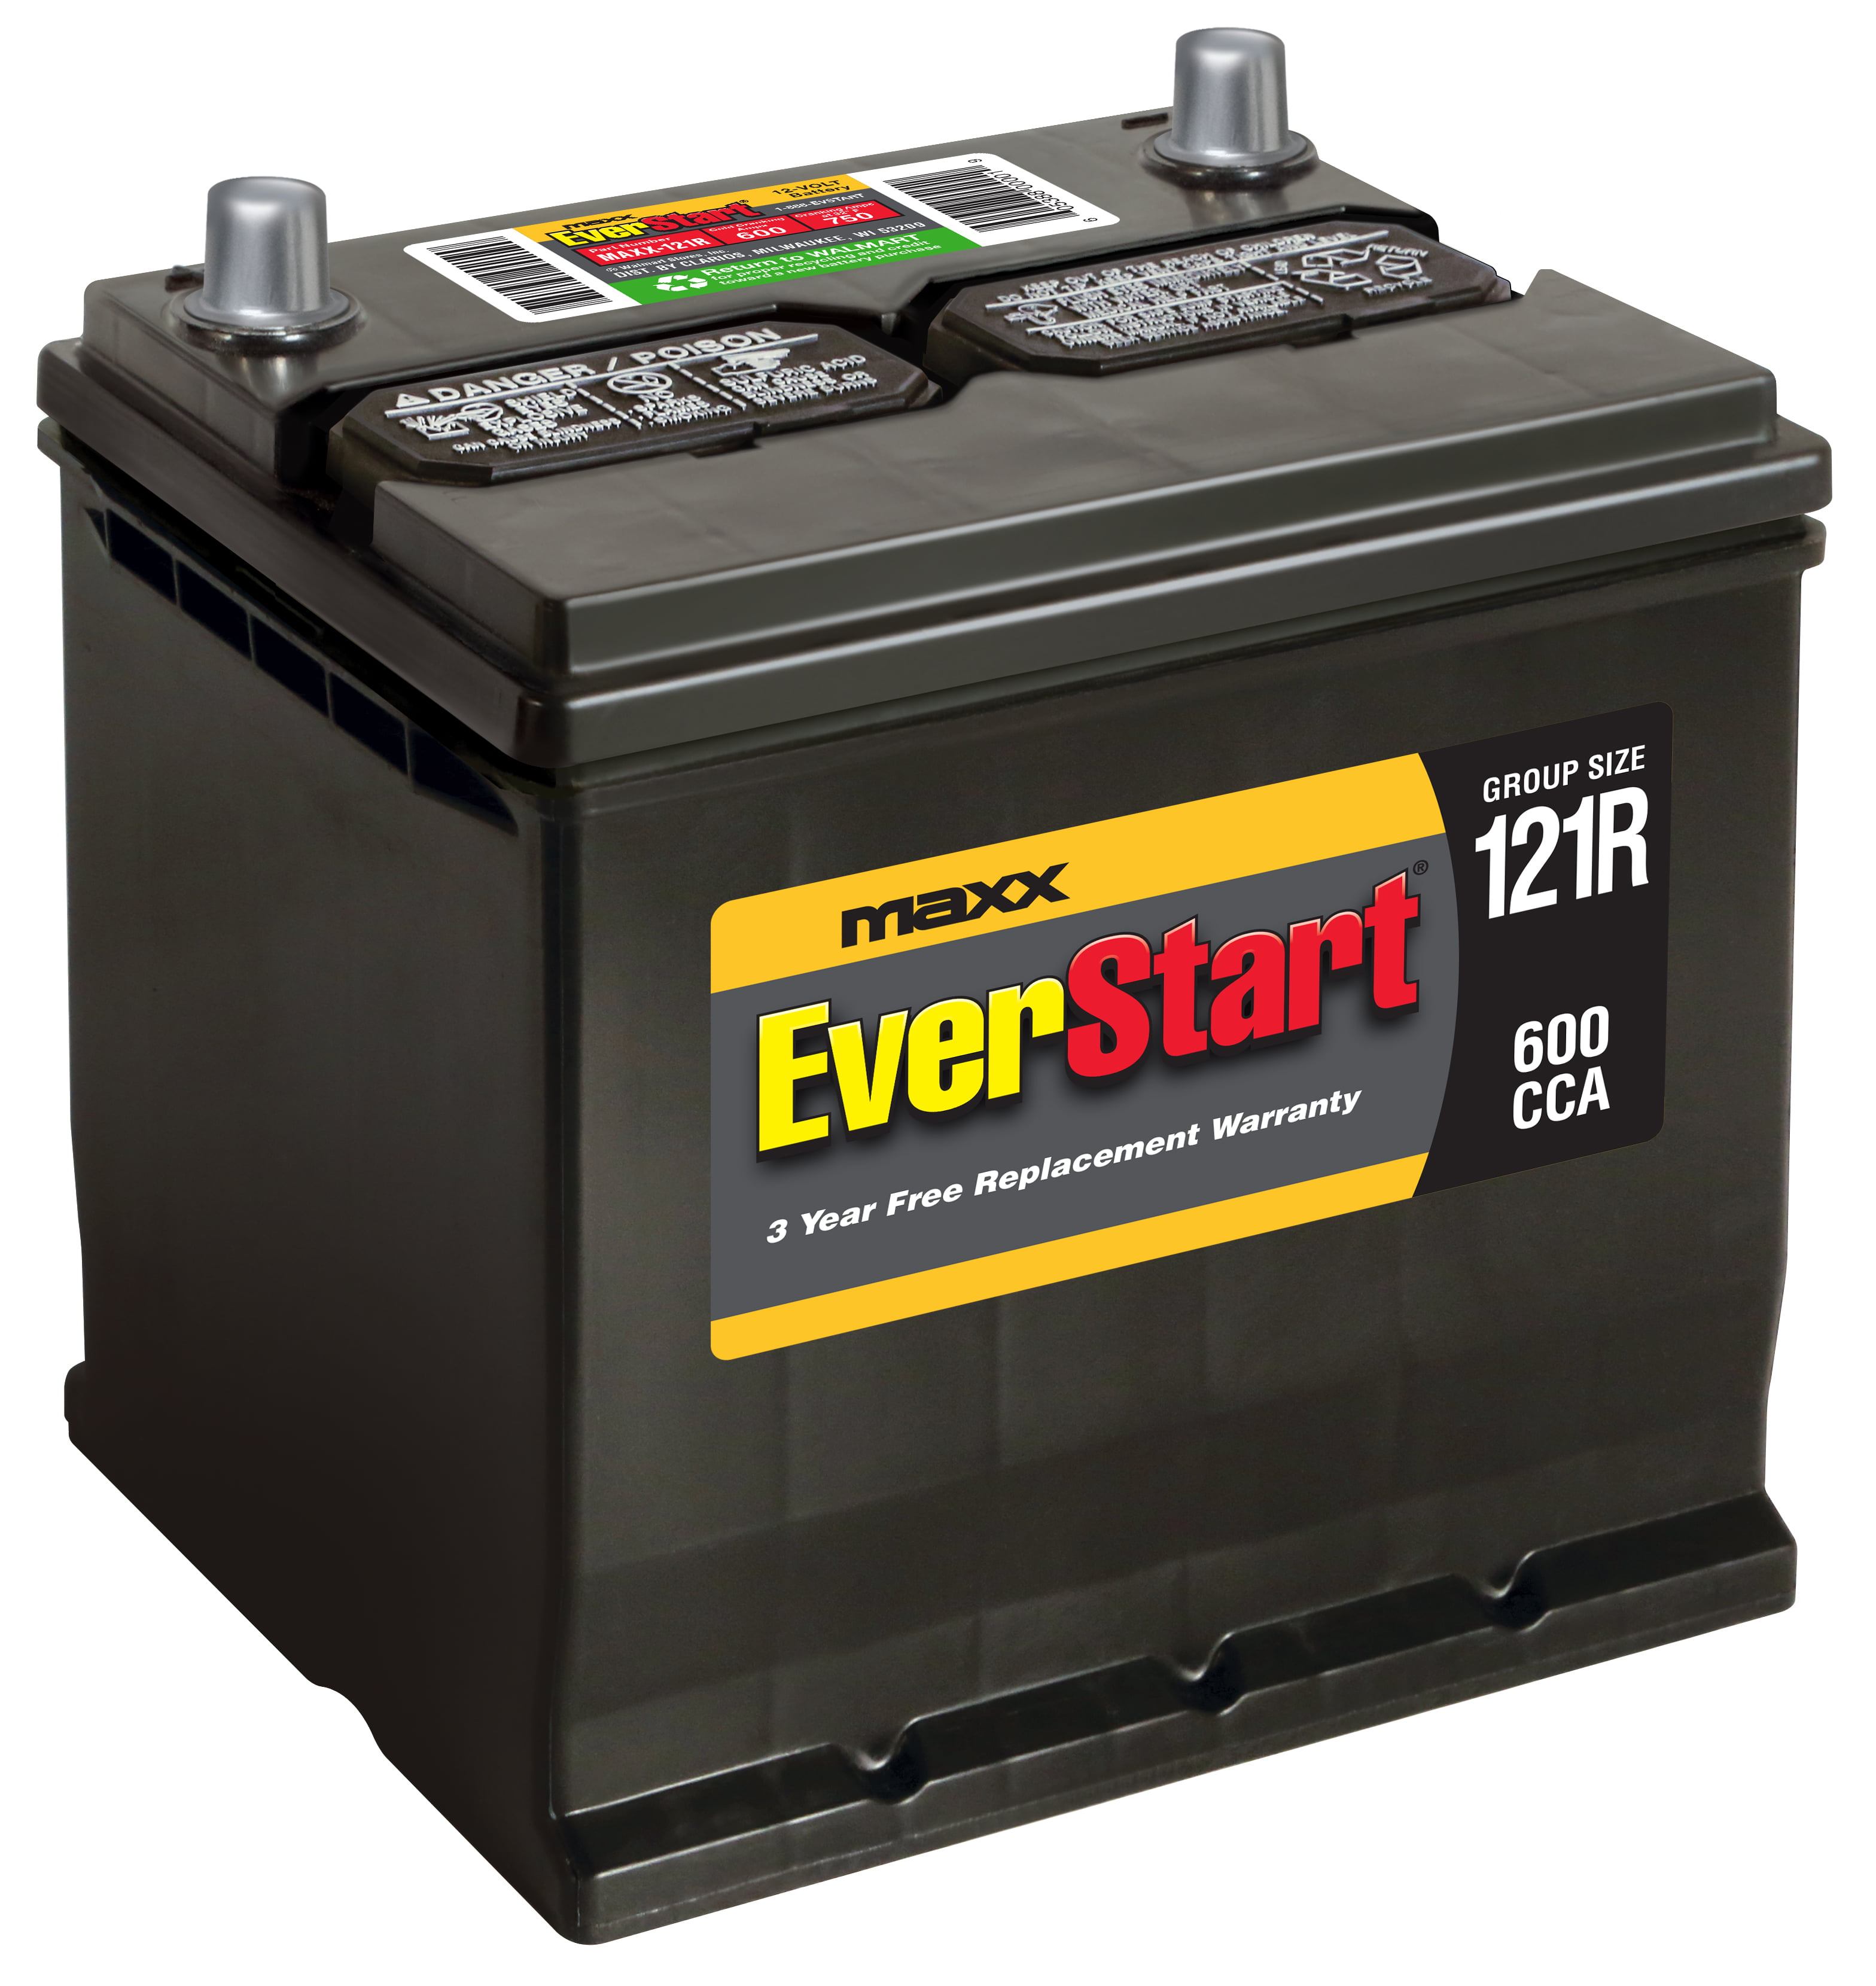 EverStart Maxx Lead Acid Automotive Battery, Group Size 121R Walmart